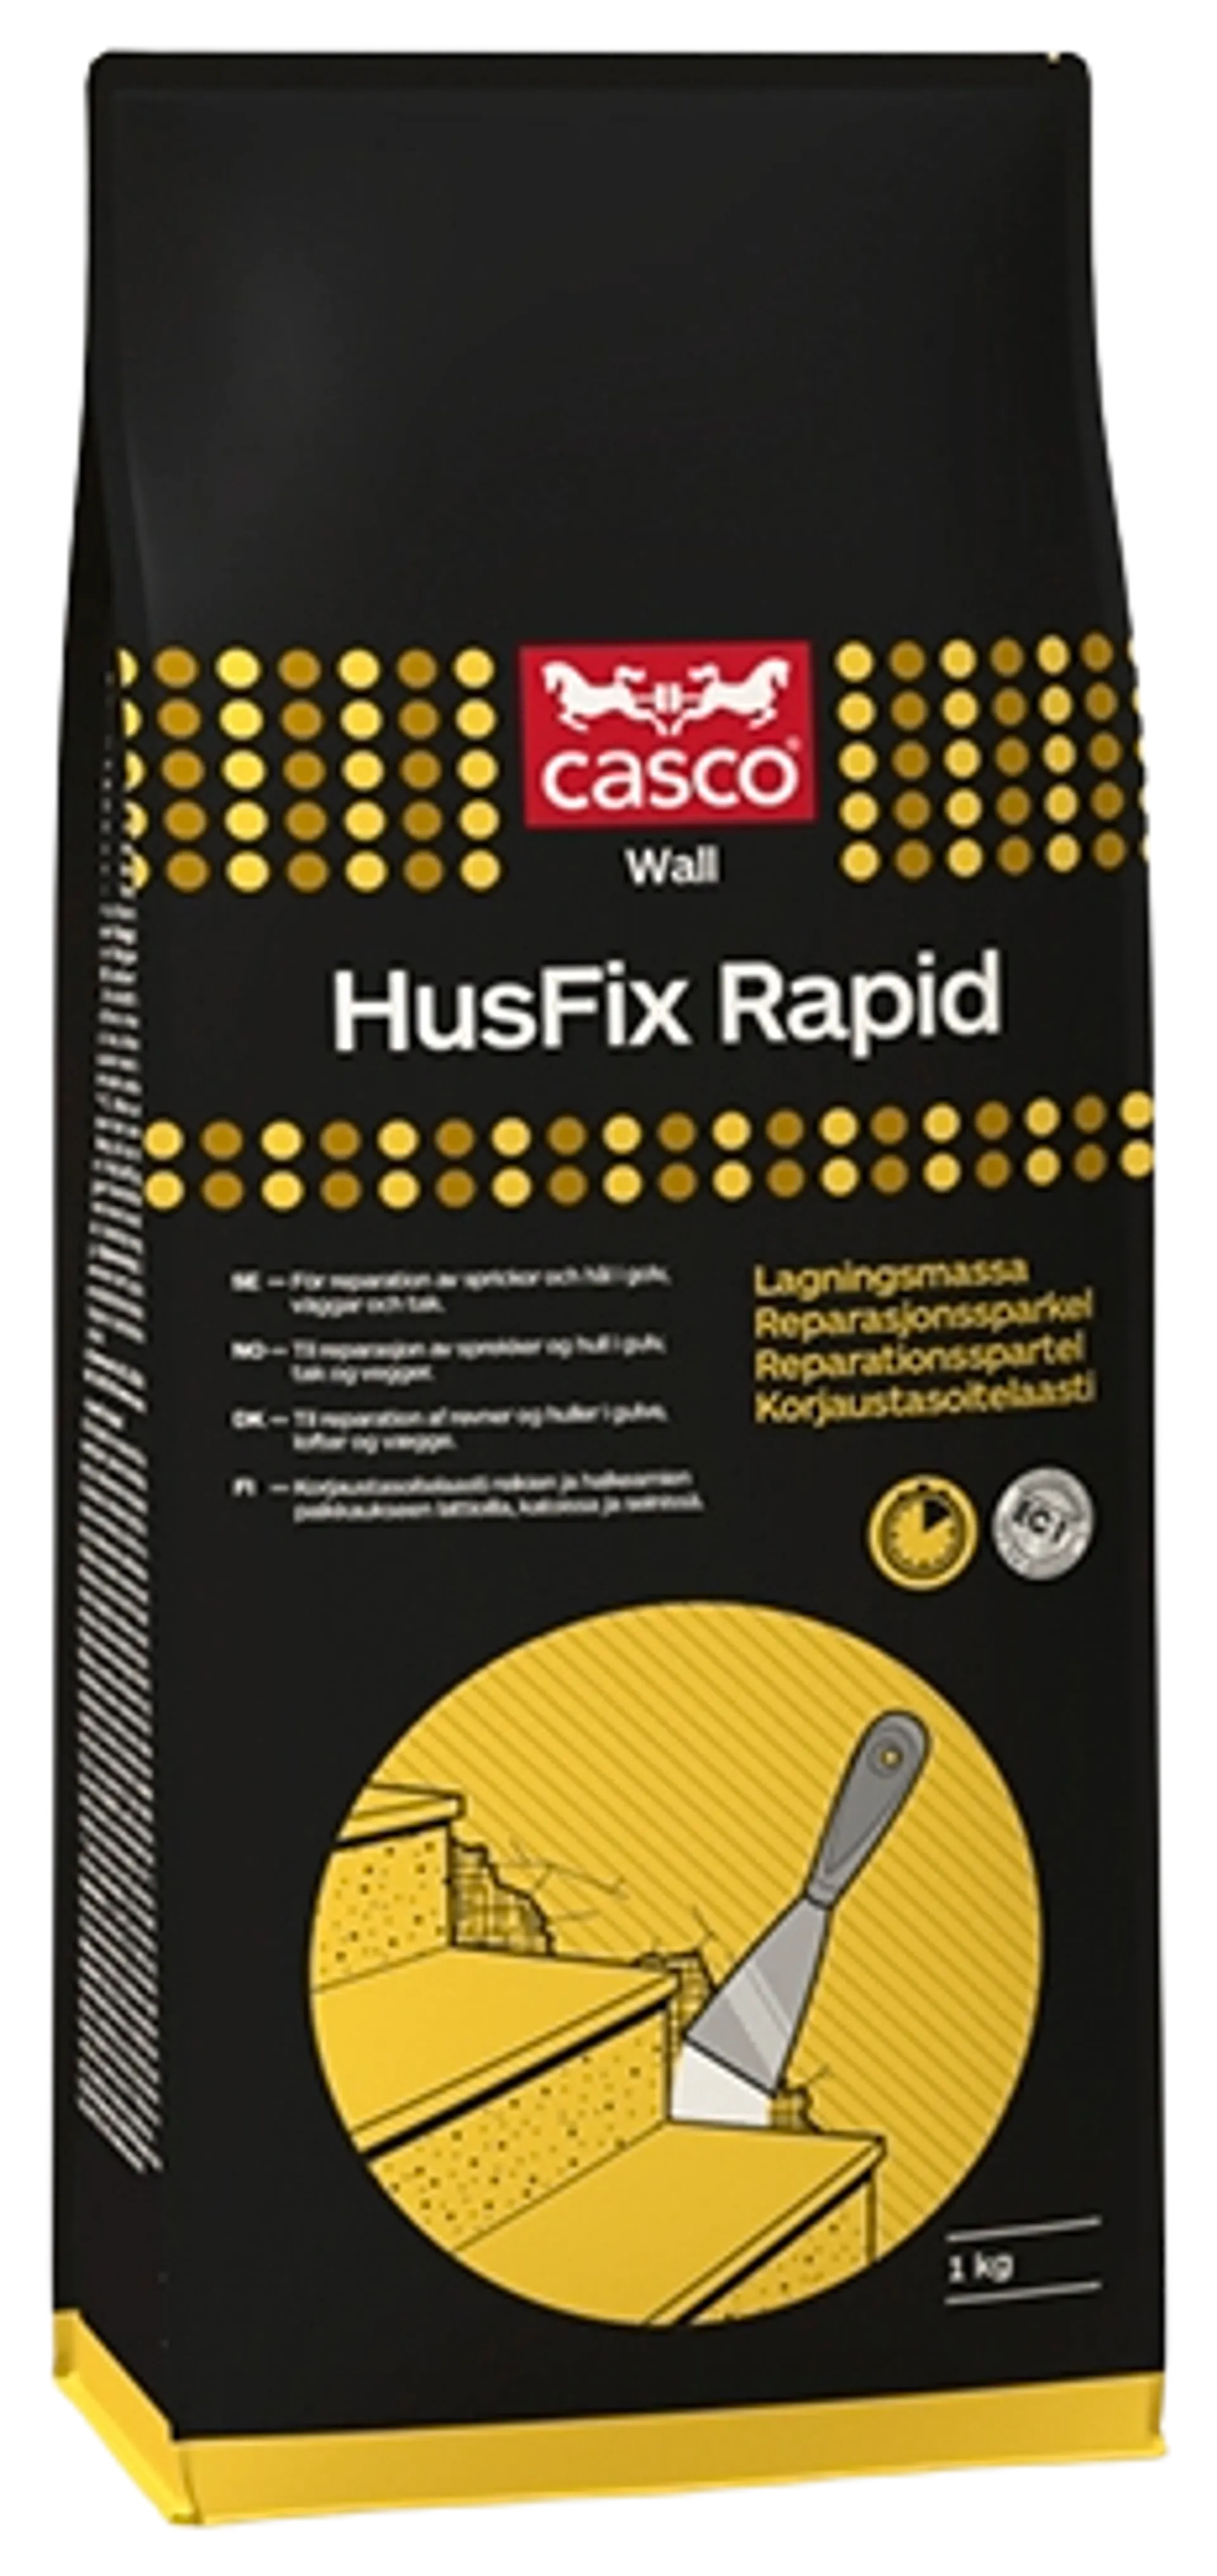 Casco seinätasoite HusFix Rapid 1kg